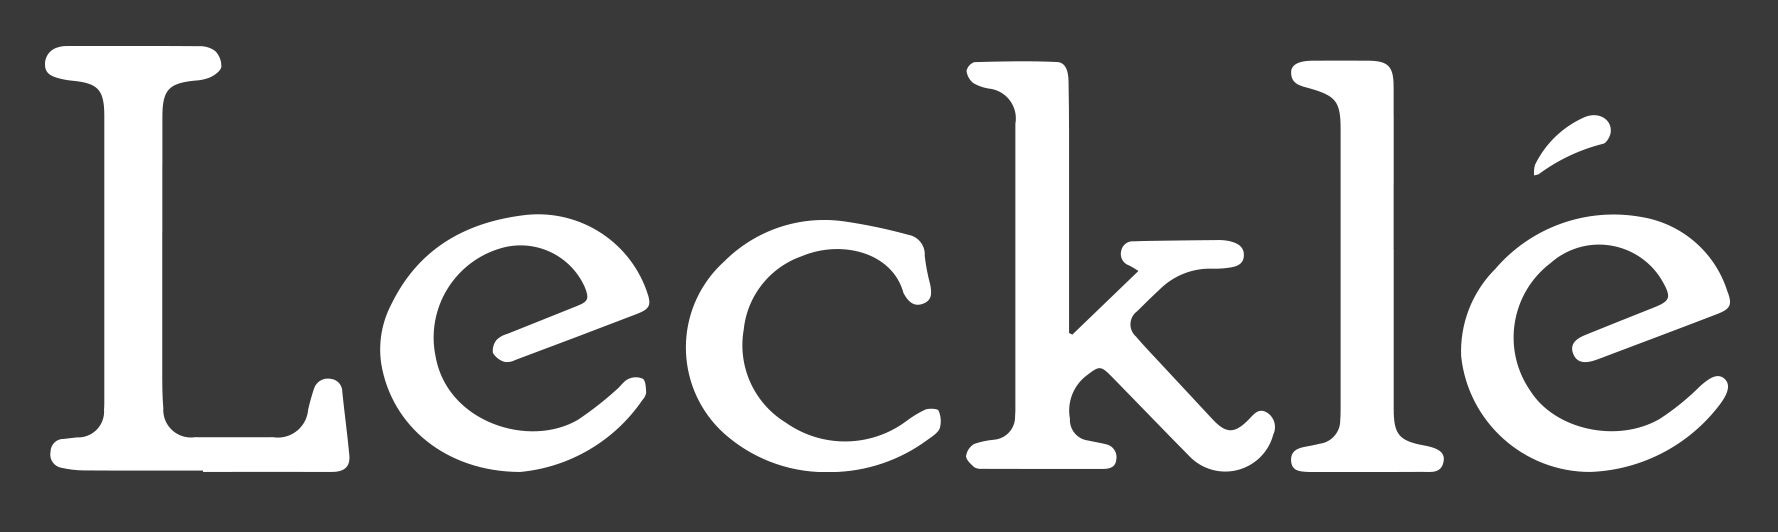 leckle logo